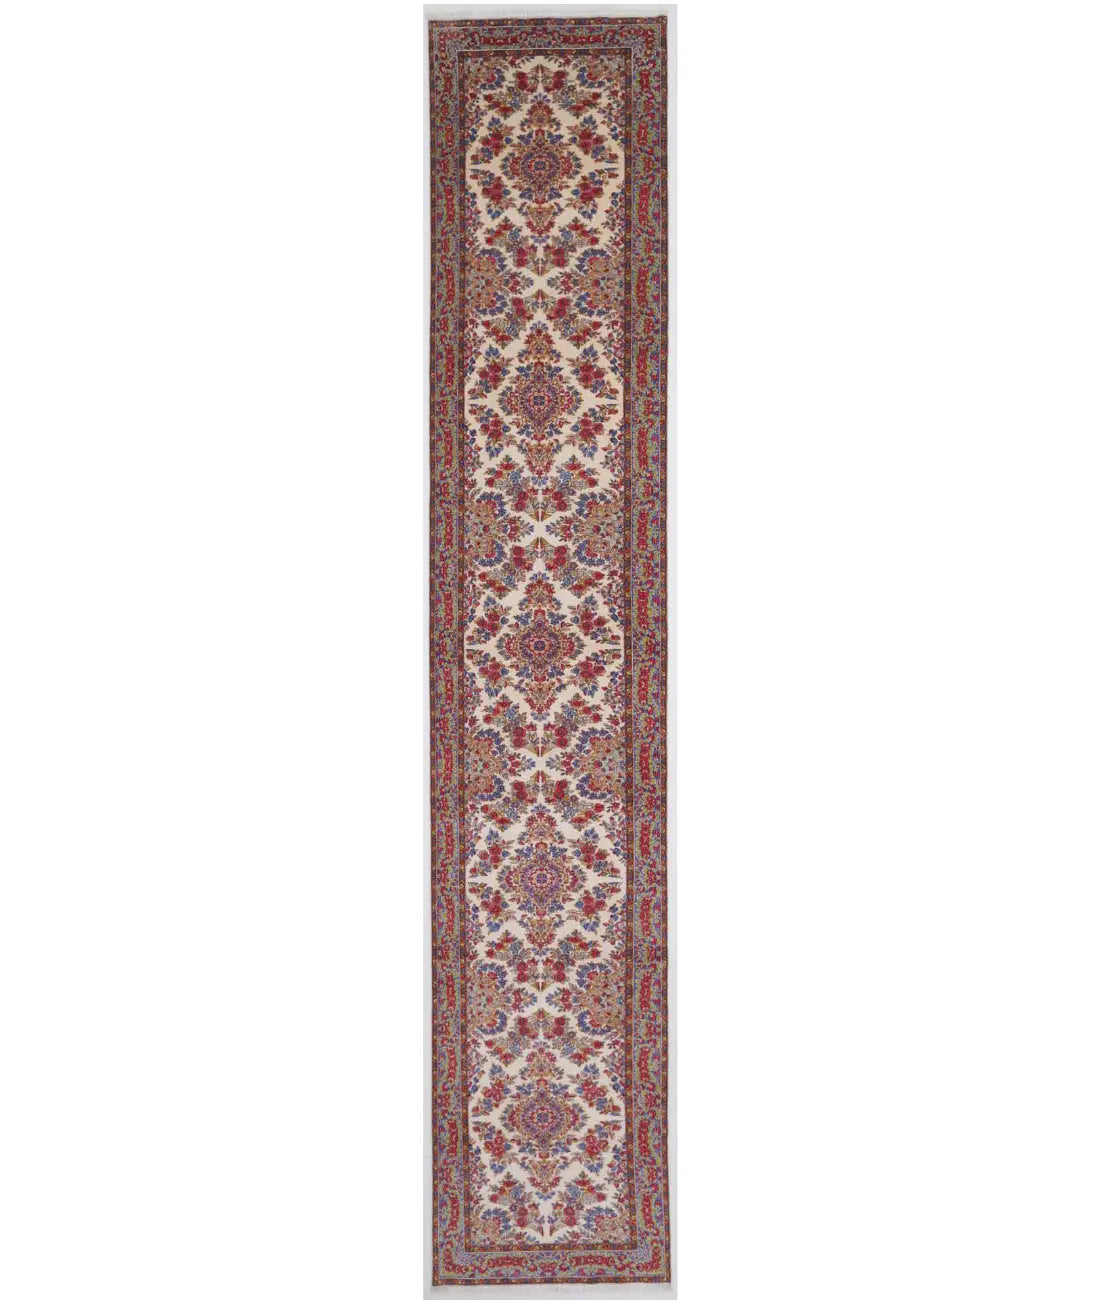 Hand Knotted Antique Masterpiece Persian Kerman Wool Rug - 3'5'' x 21'1'' - Arteverk Rugs Area rug